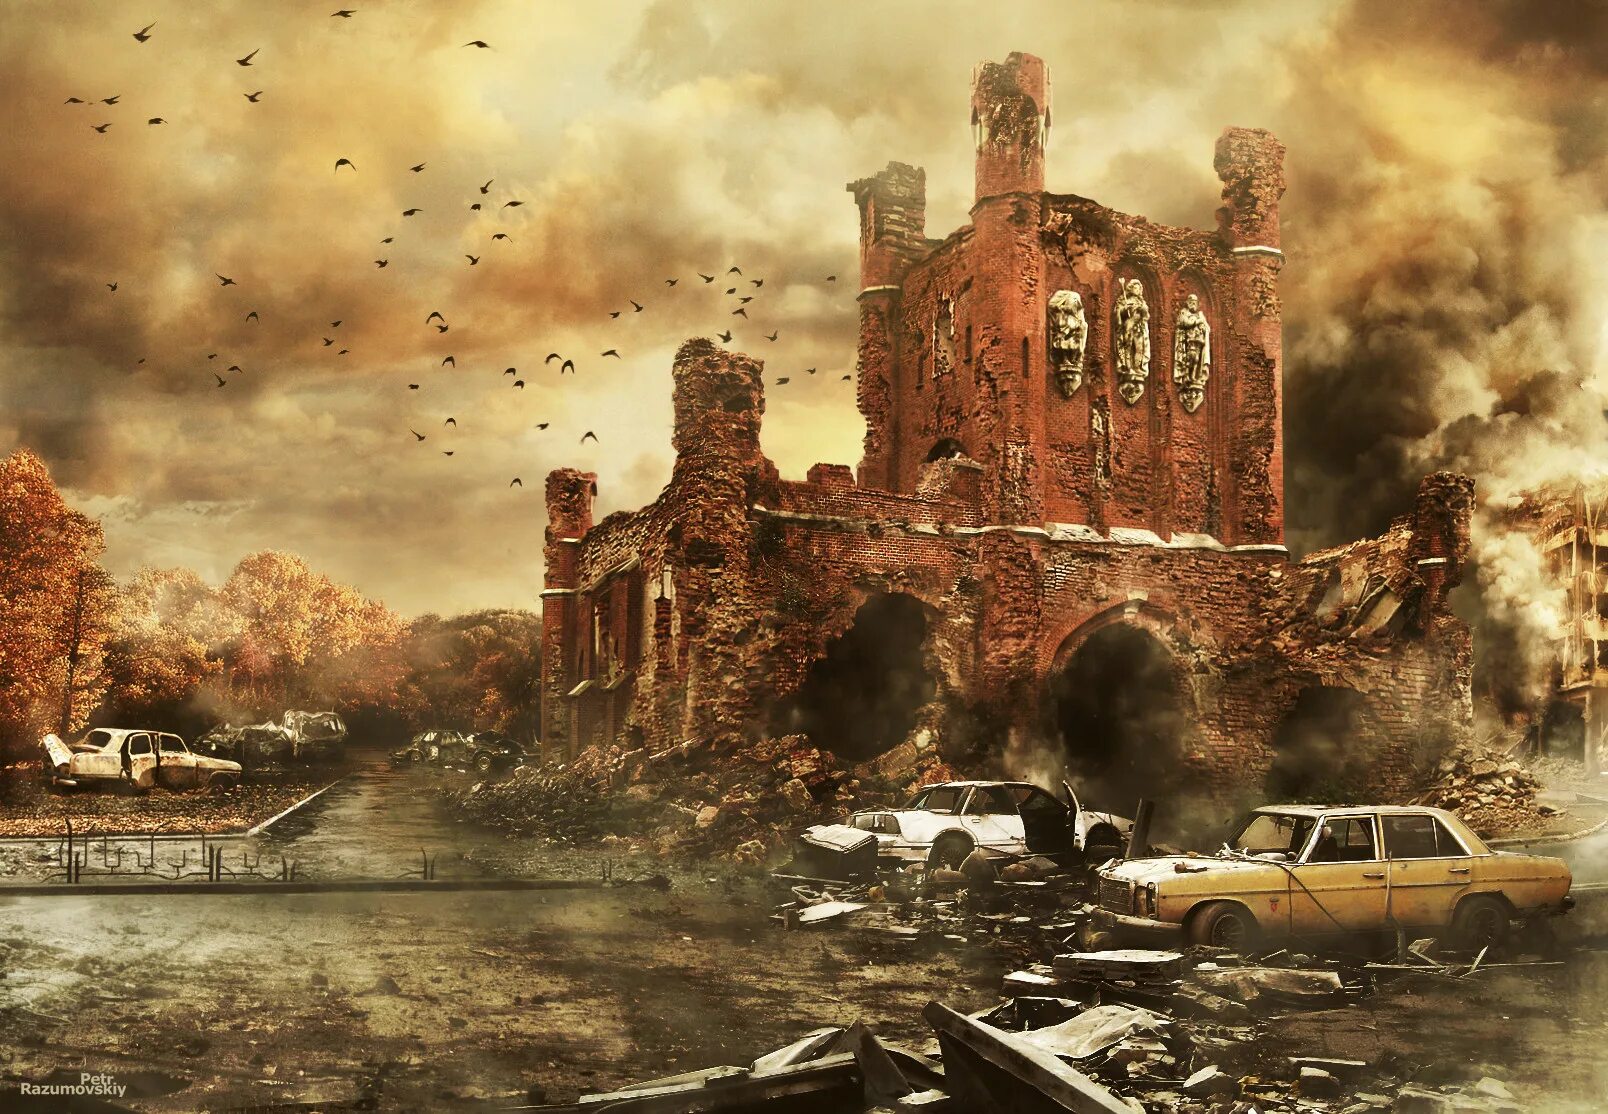 Destroyed town. Постапокалипсис Калининград. Калининград после апокалипсиса. Разрушенный город.